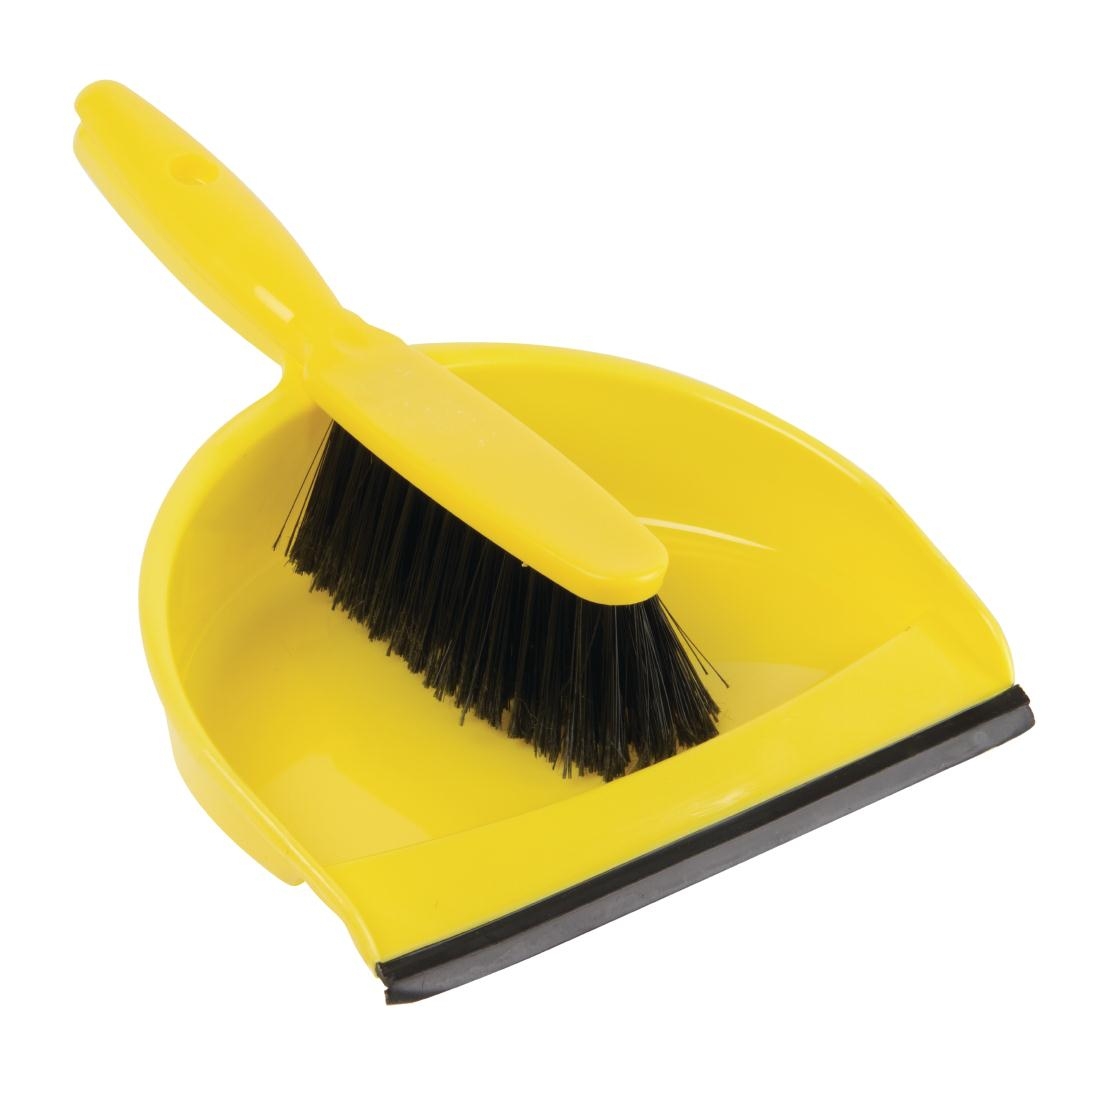 Jantex Soft Dustpan and Brush Set Yellow